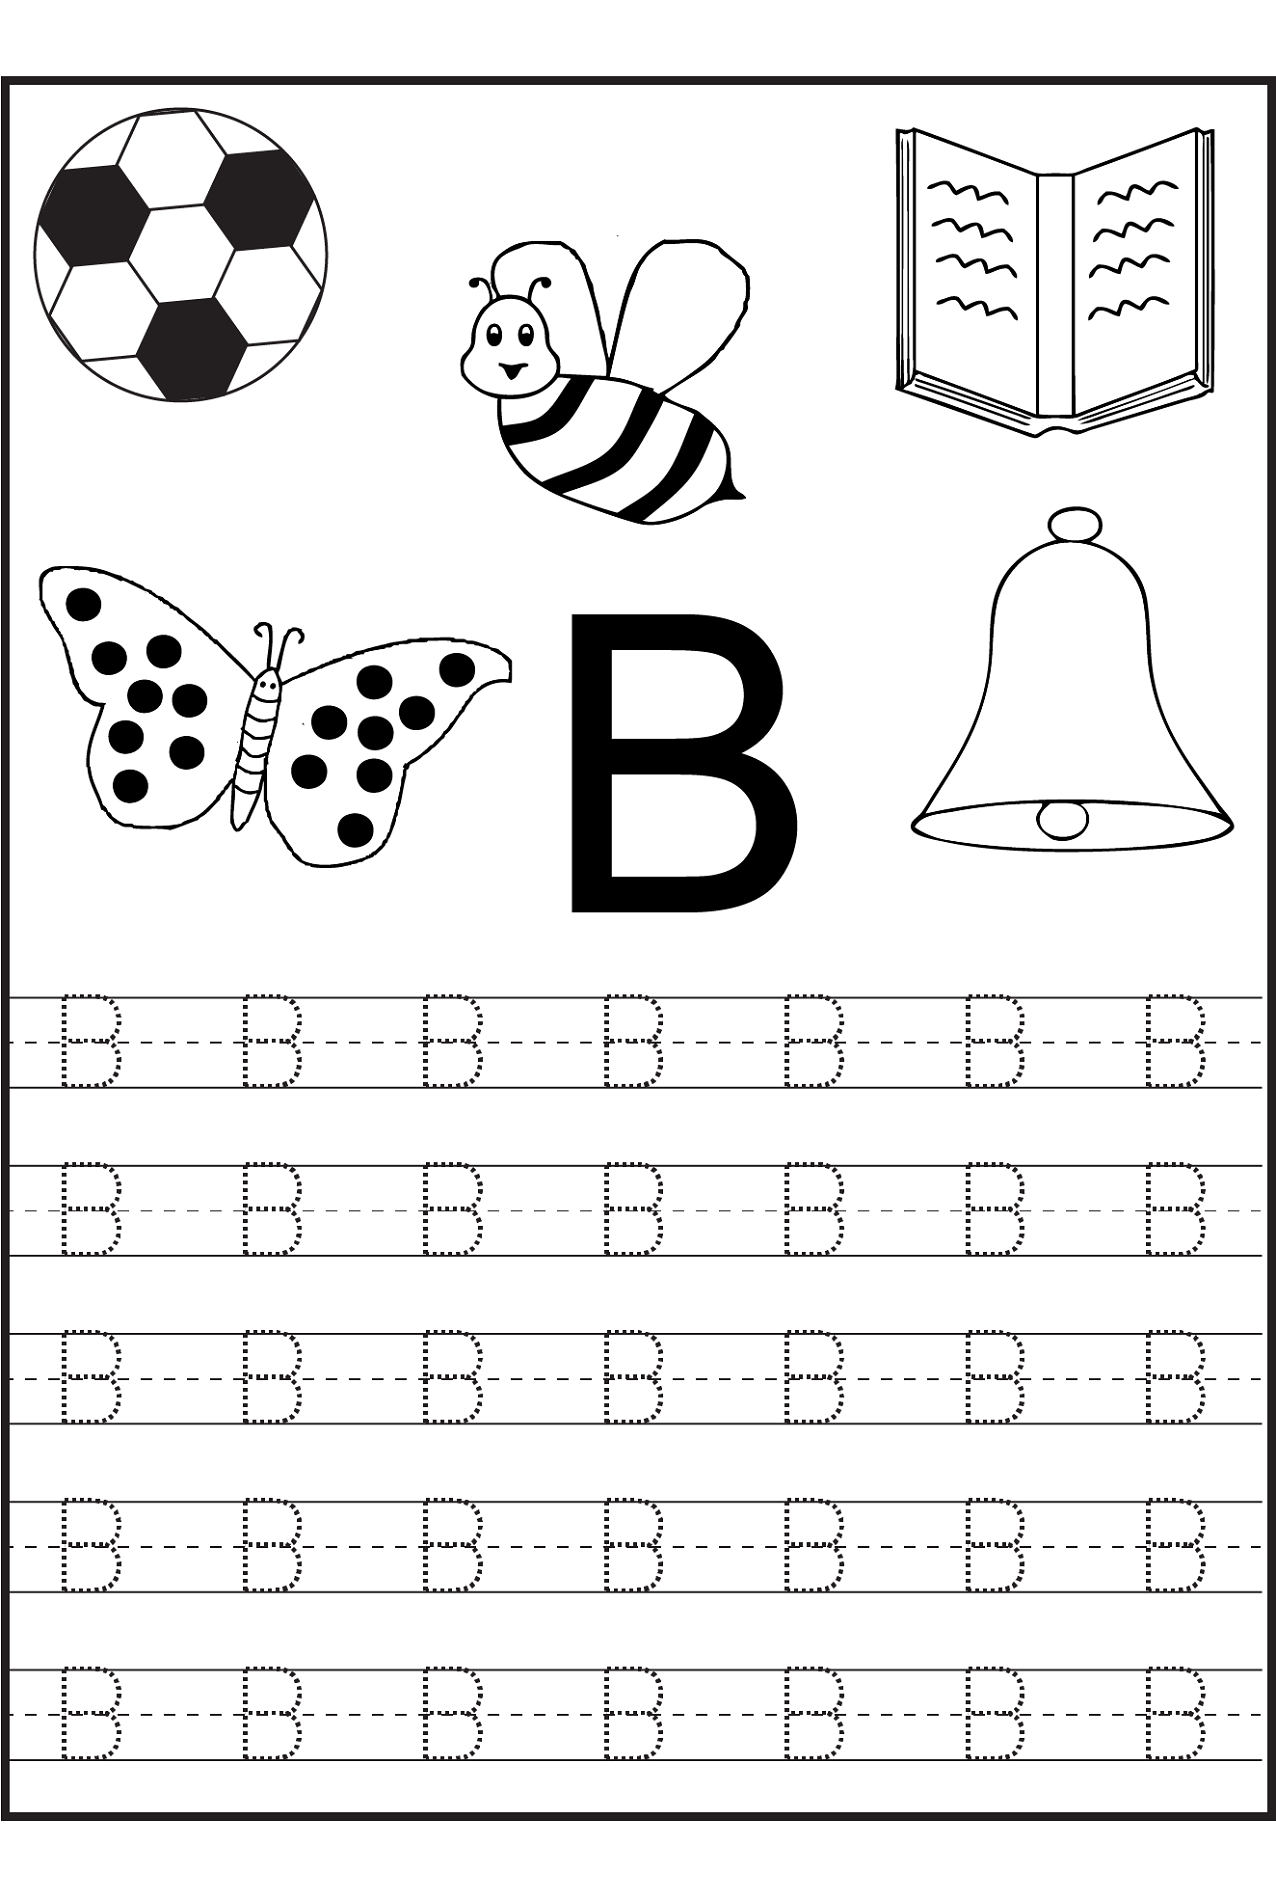 traceable letters worksheets letter B